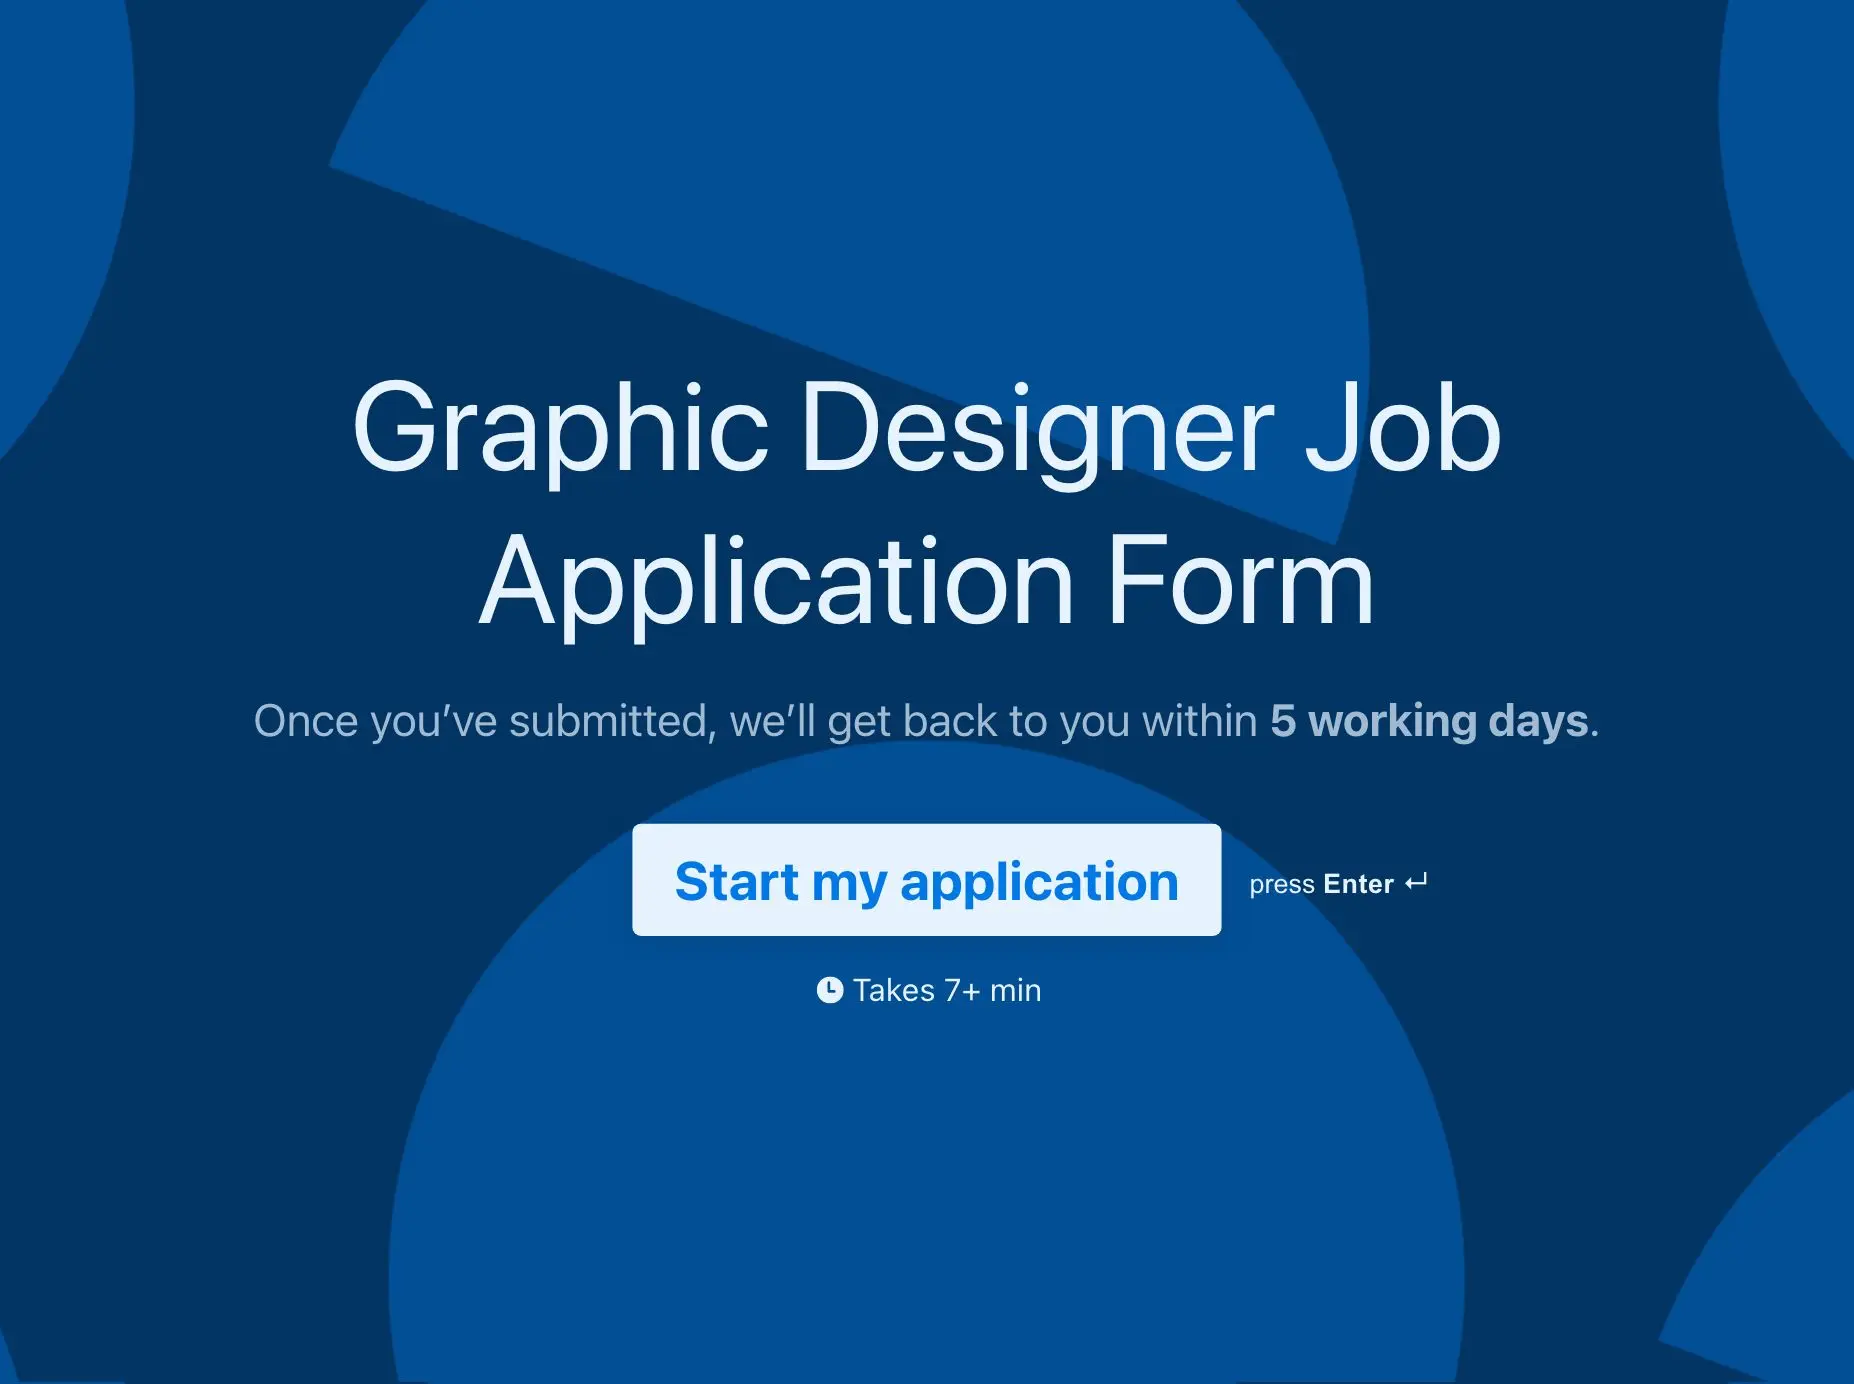 Graphic Designer Job Application Form Template Hero